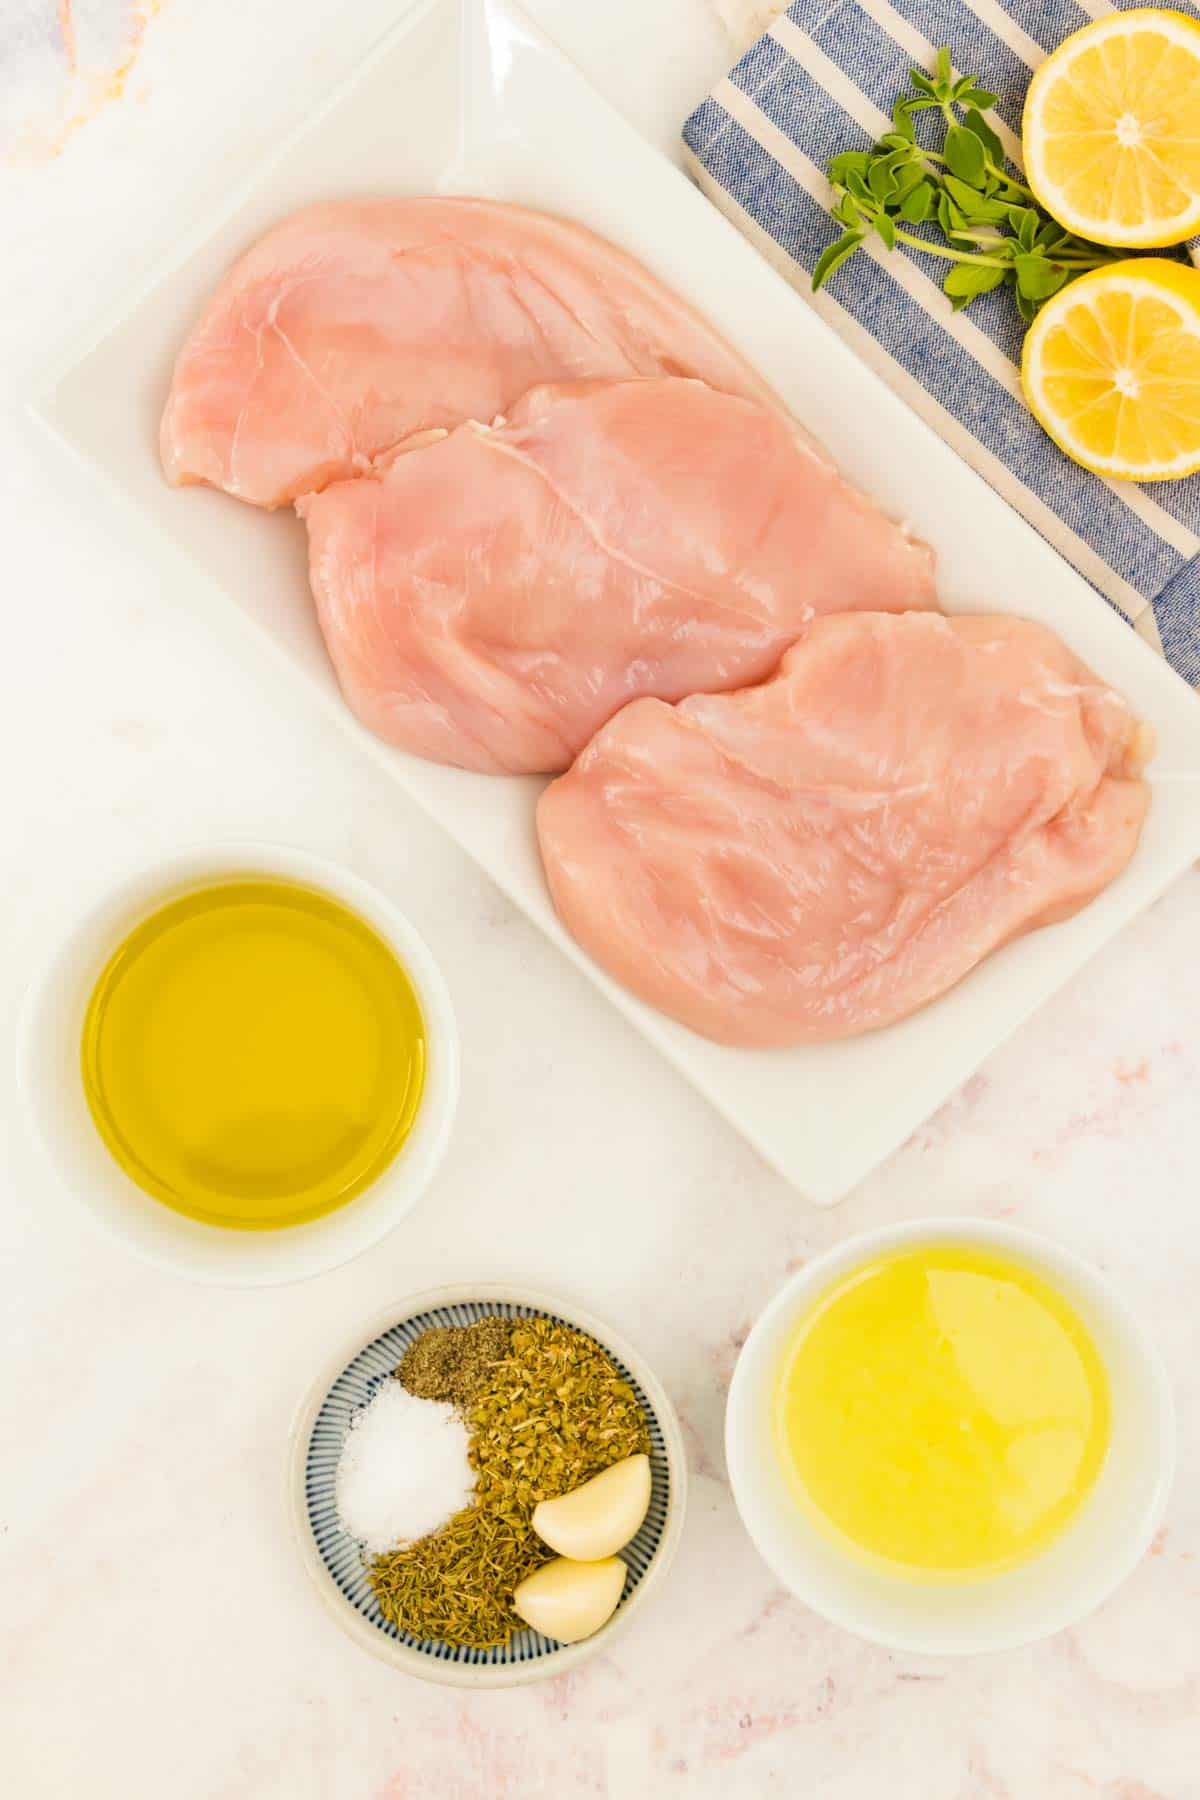 Ingredients for Greek grilled chicken - chicken, olive oil, spices, lemon juice.